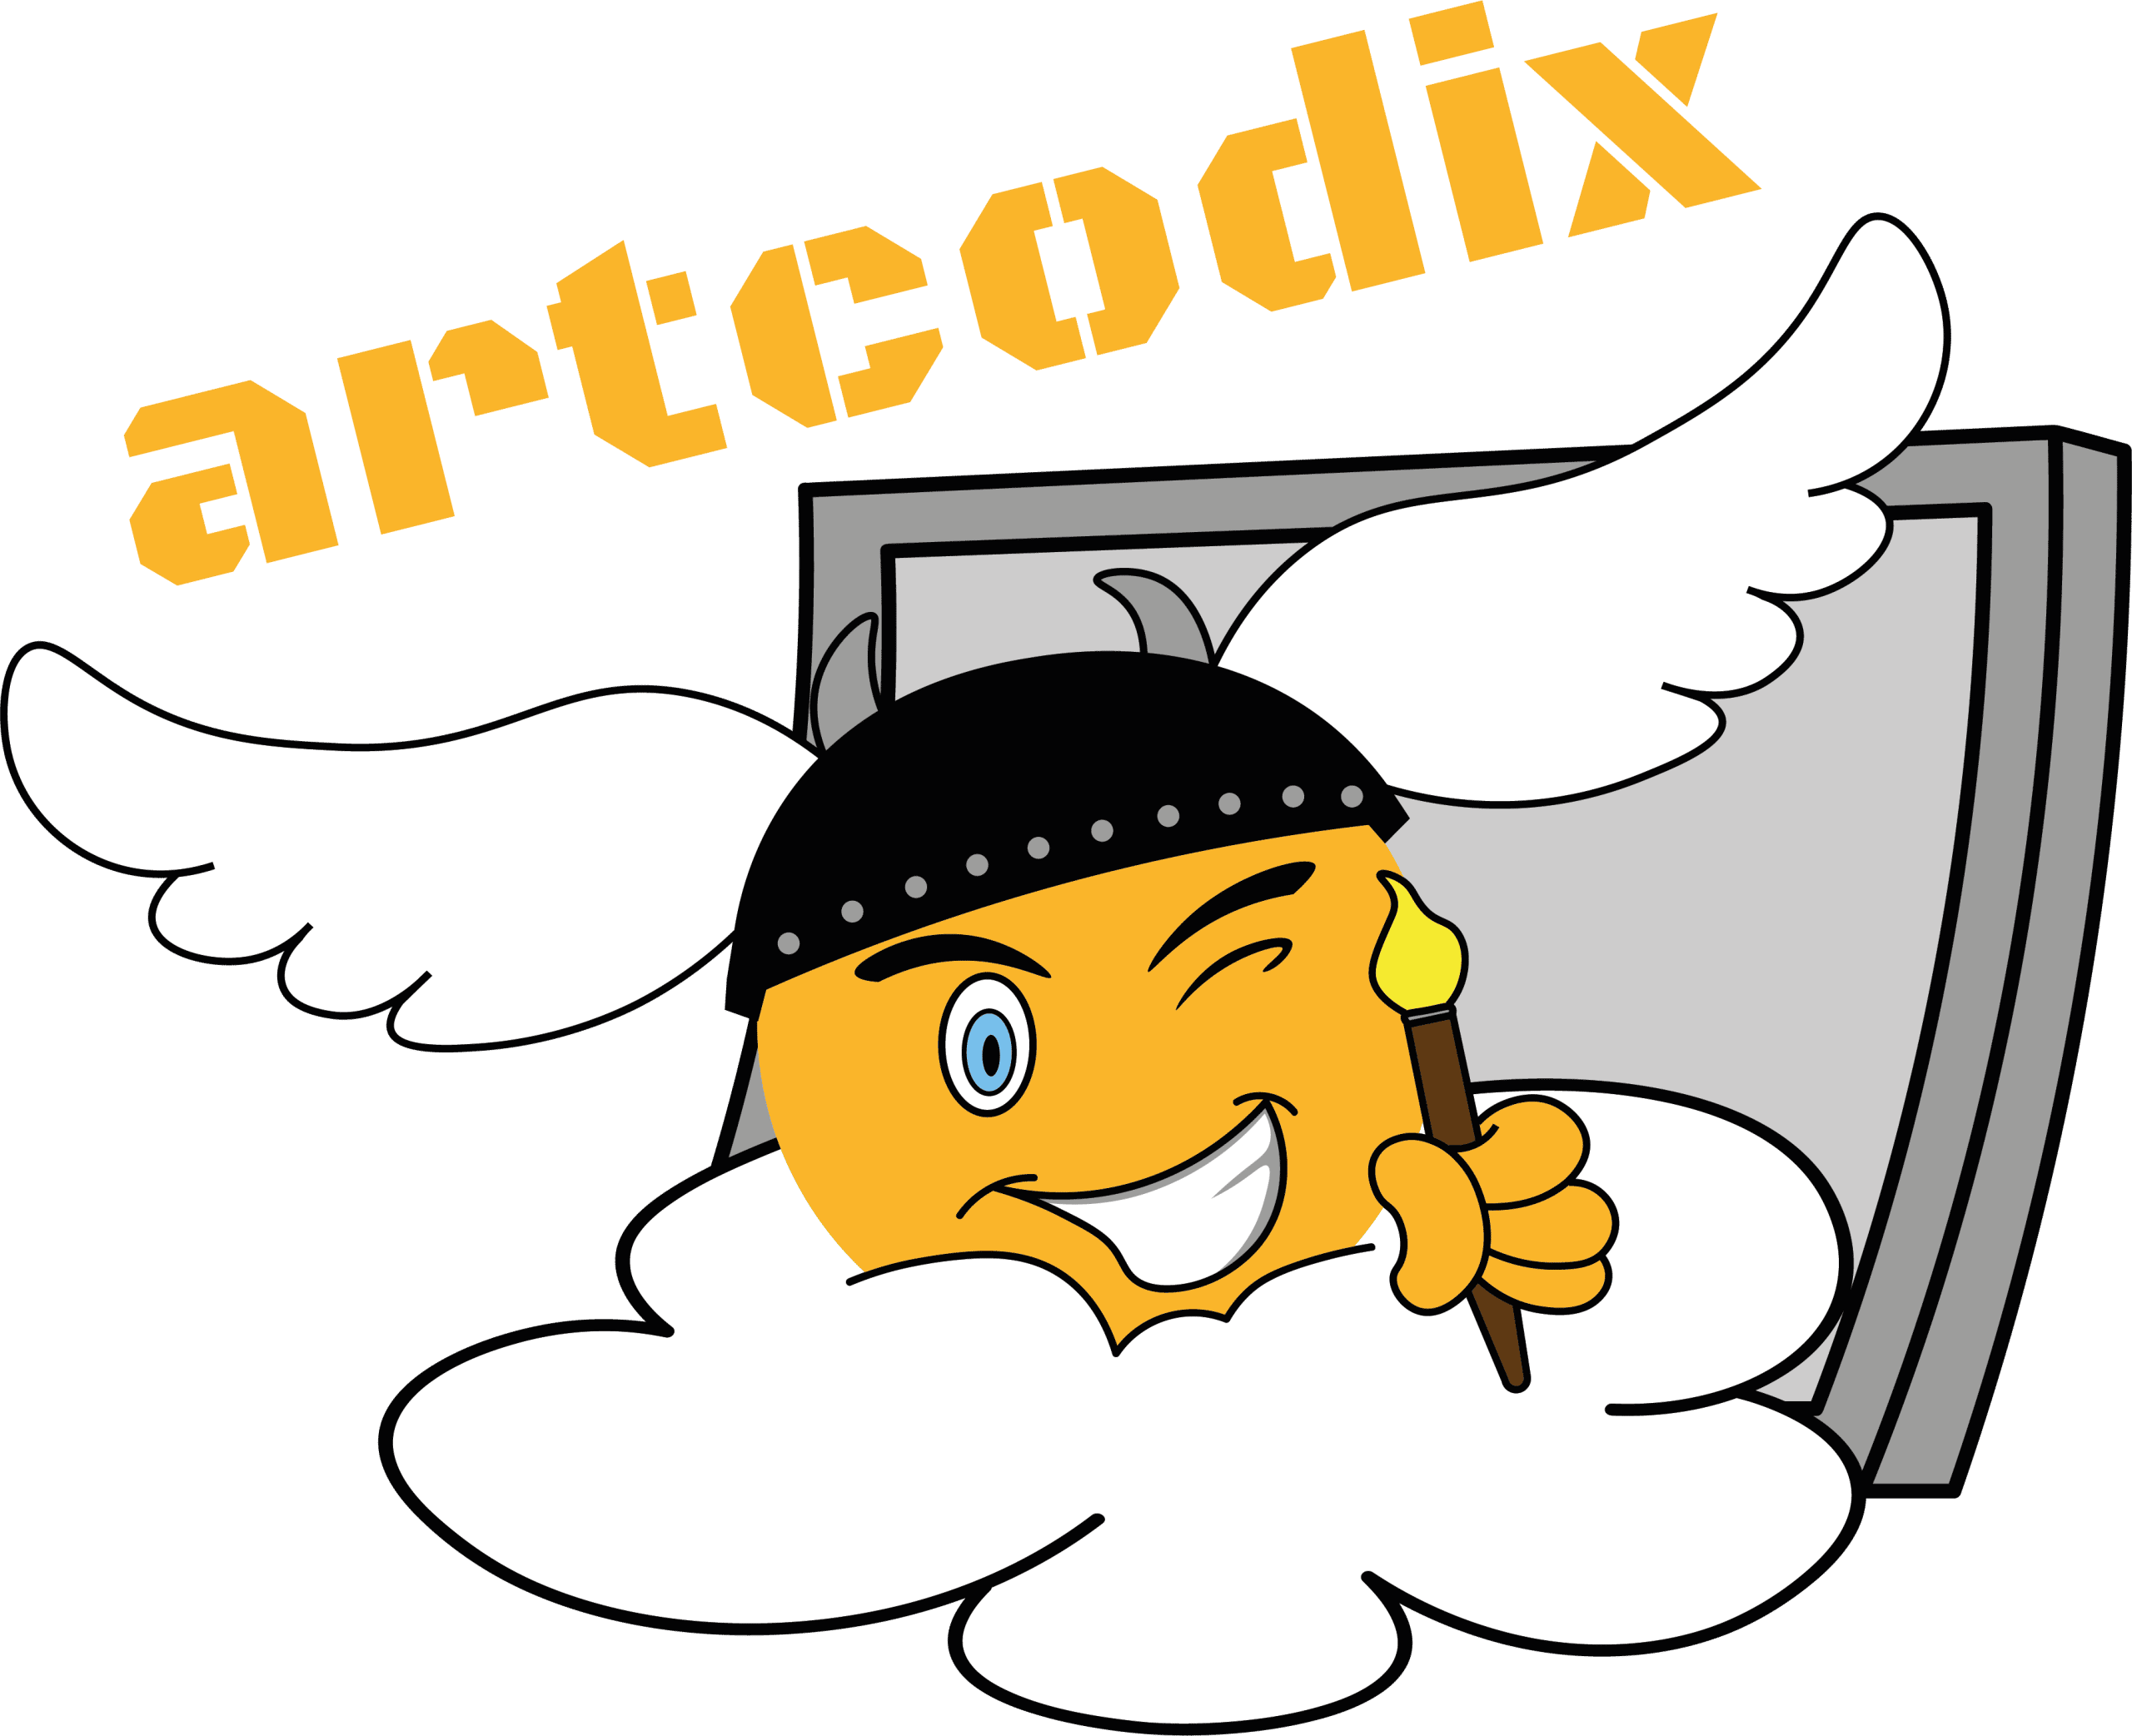 Cloud artcodix 01.01 2022 - Alle Mitglieder